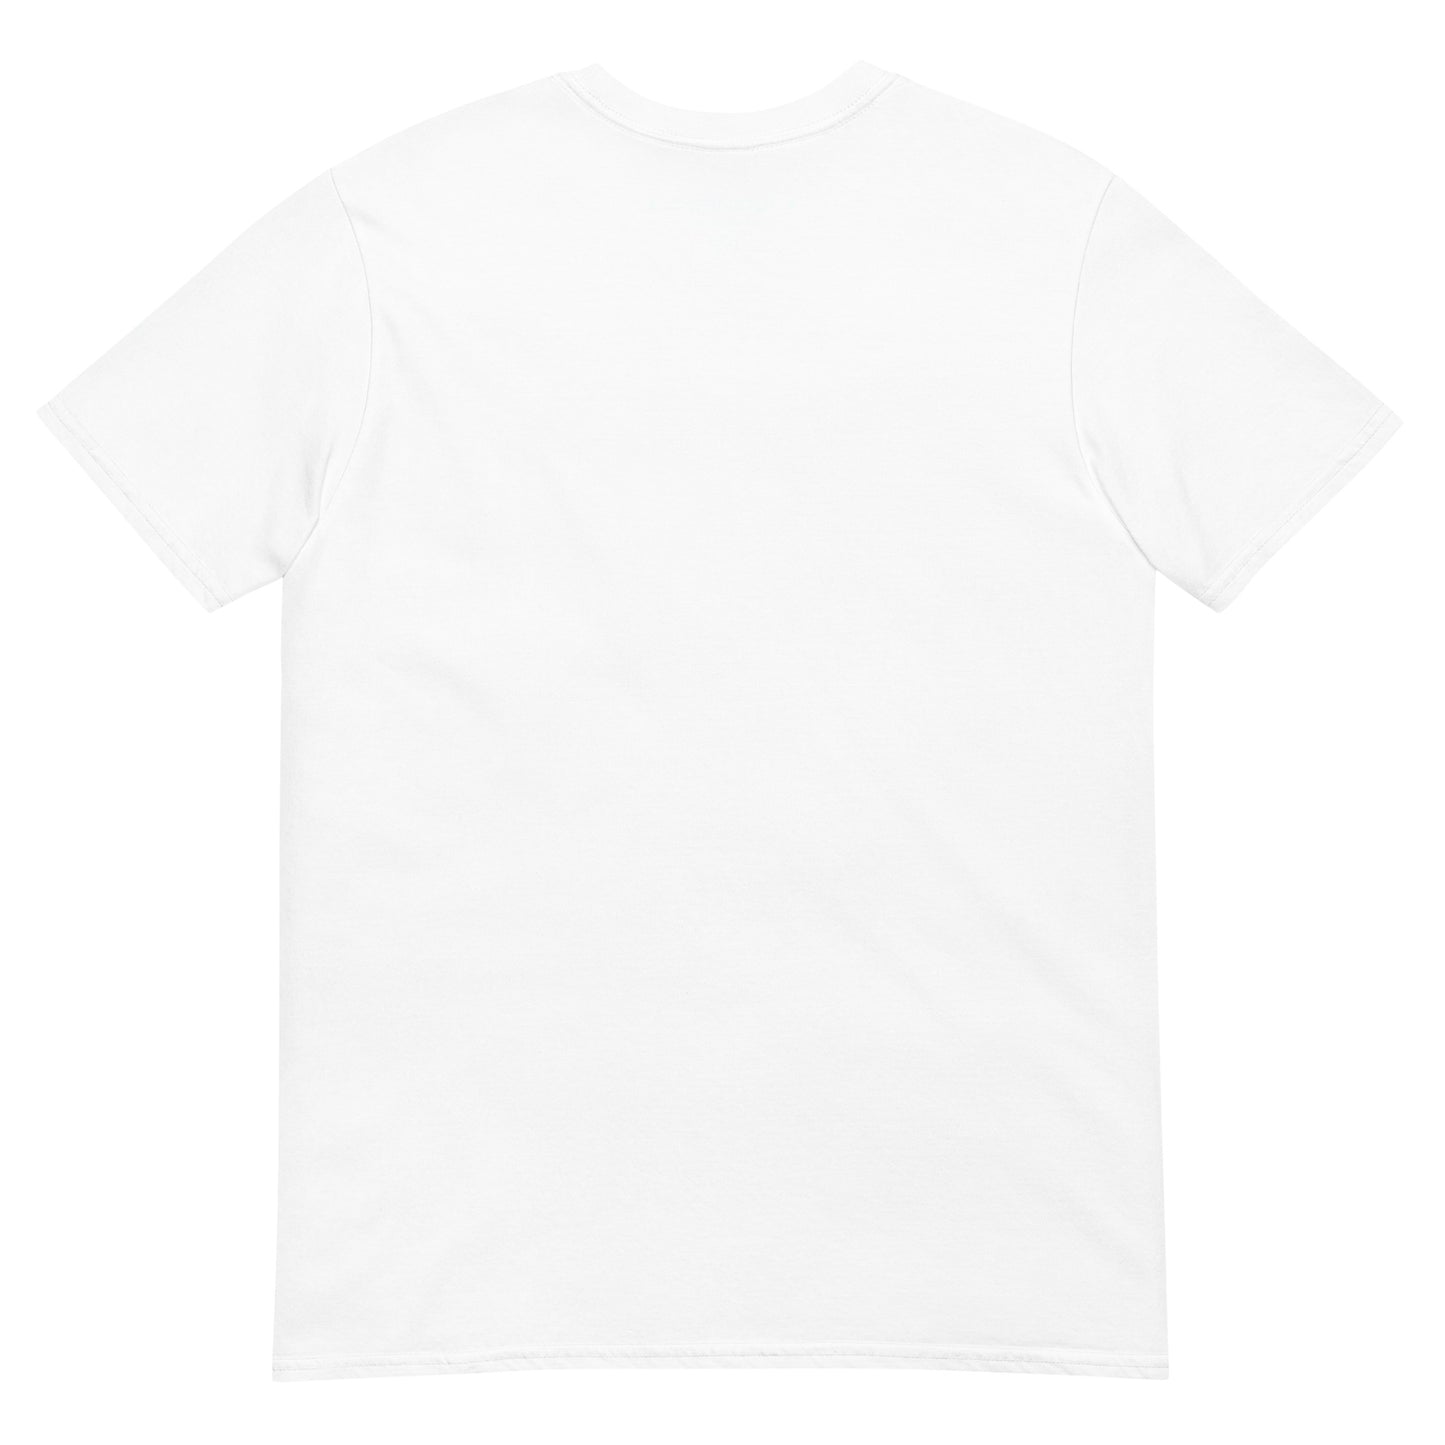 Short-Sleeve Unisex T-Shirt Americano